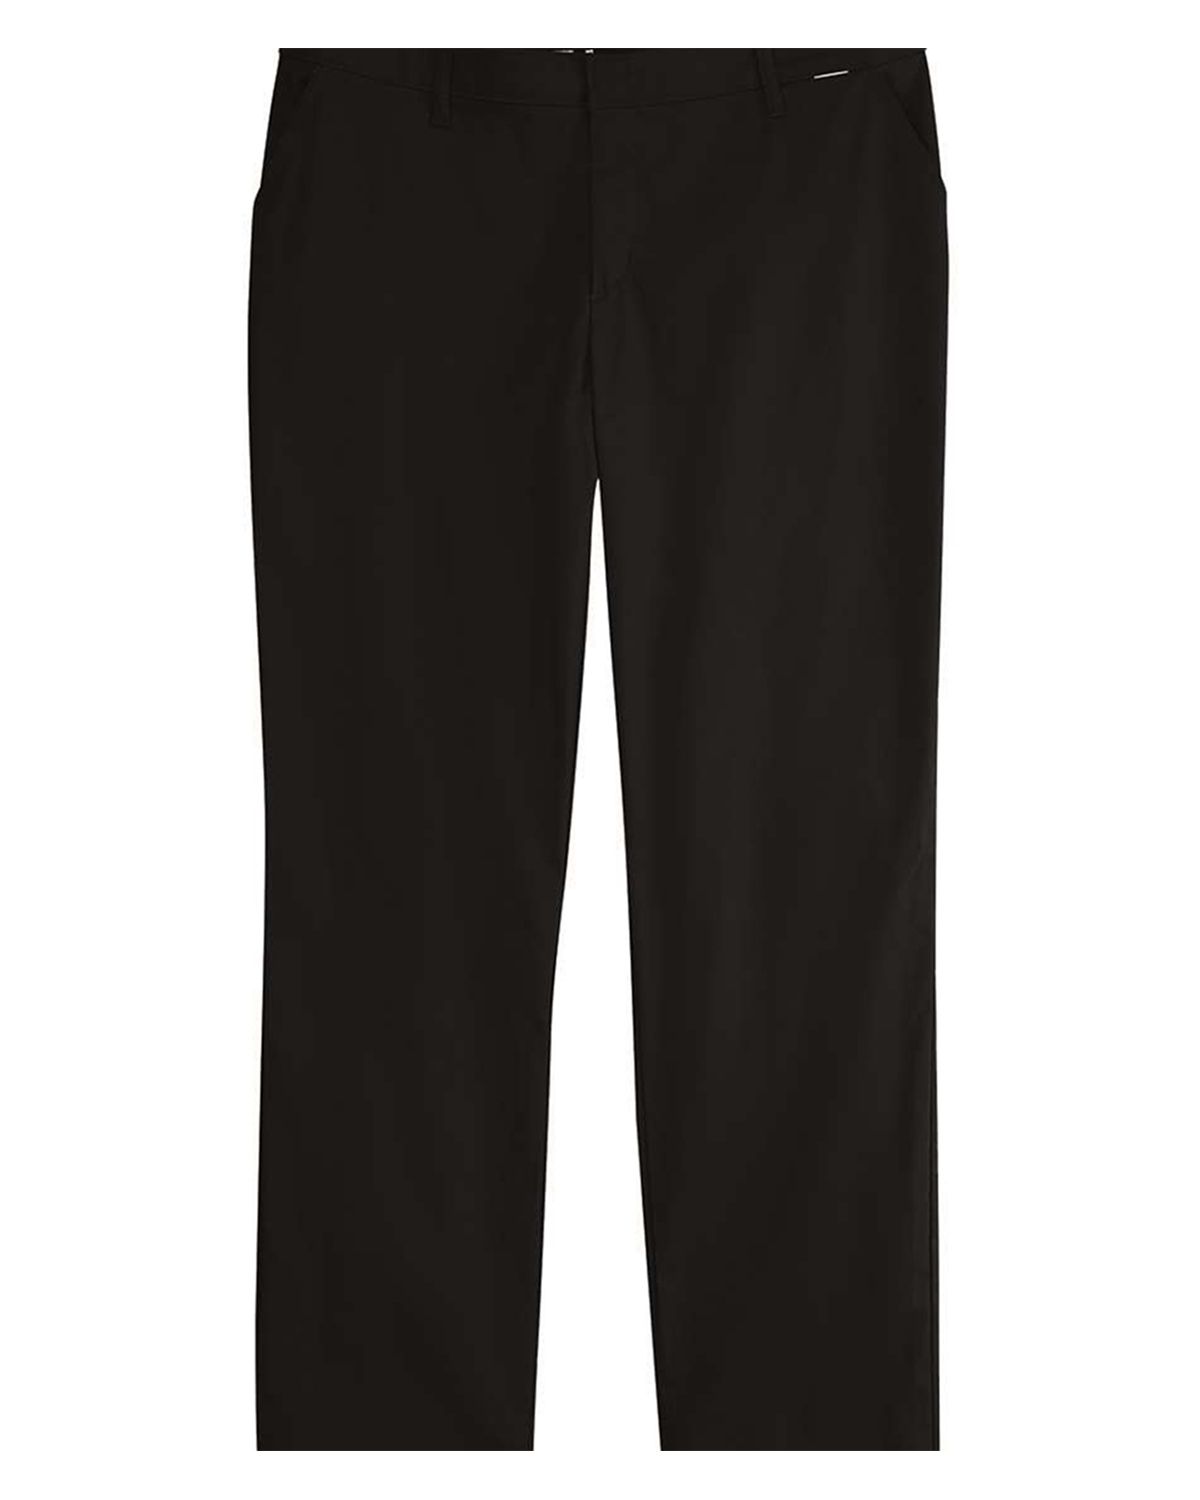 UPC 889440003853 product image for Dickies FW21 Women's Premium Flat Front Pants - Plus - Black - 22 | upcitemdb.com